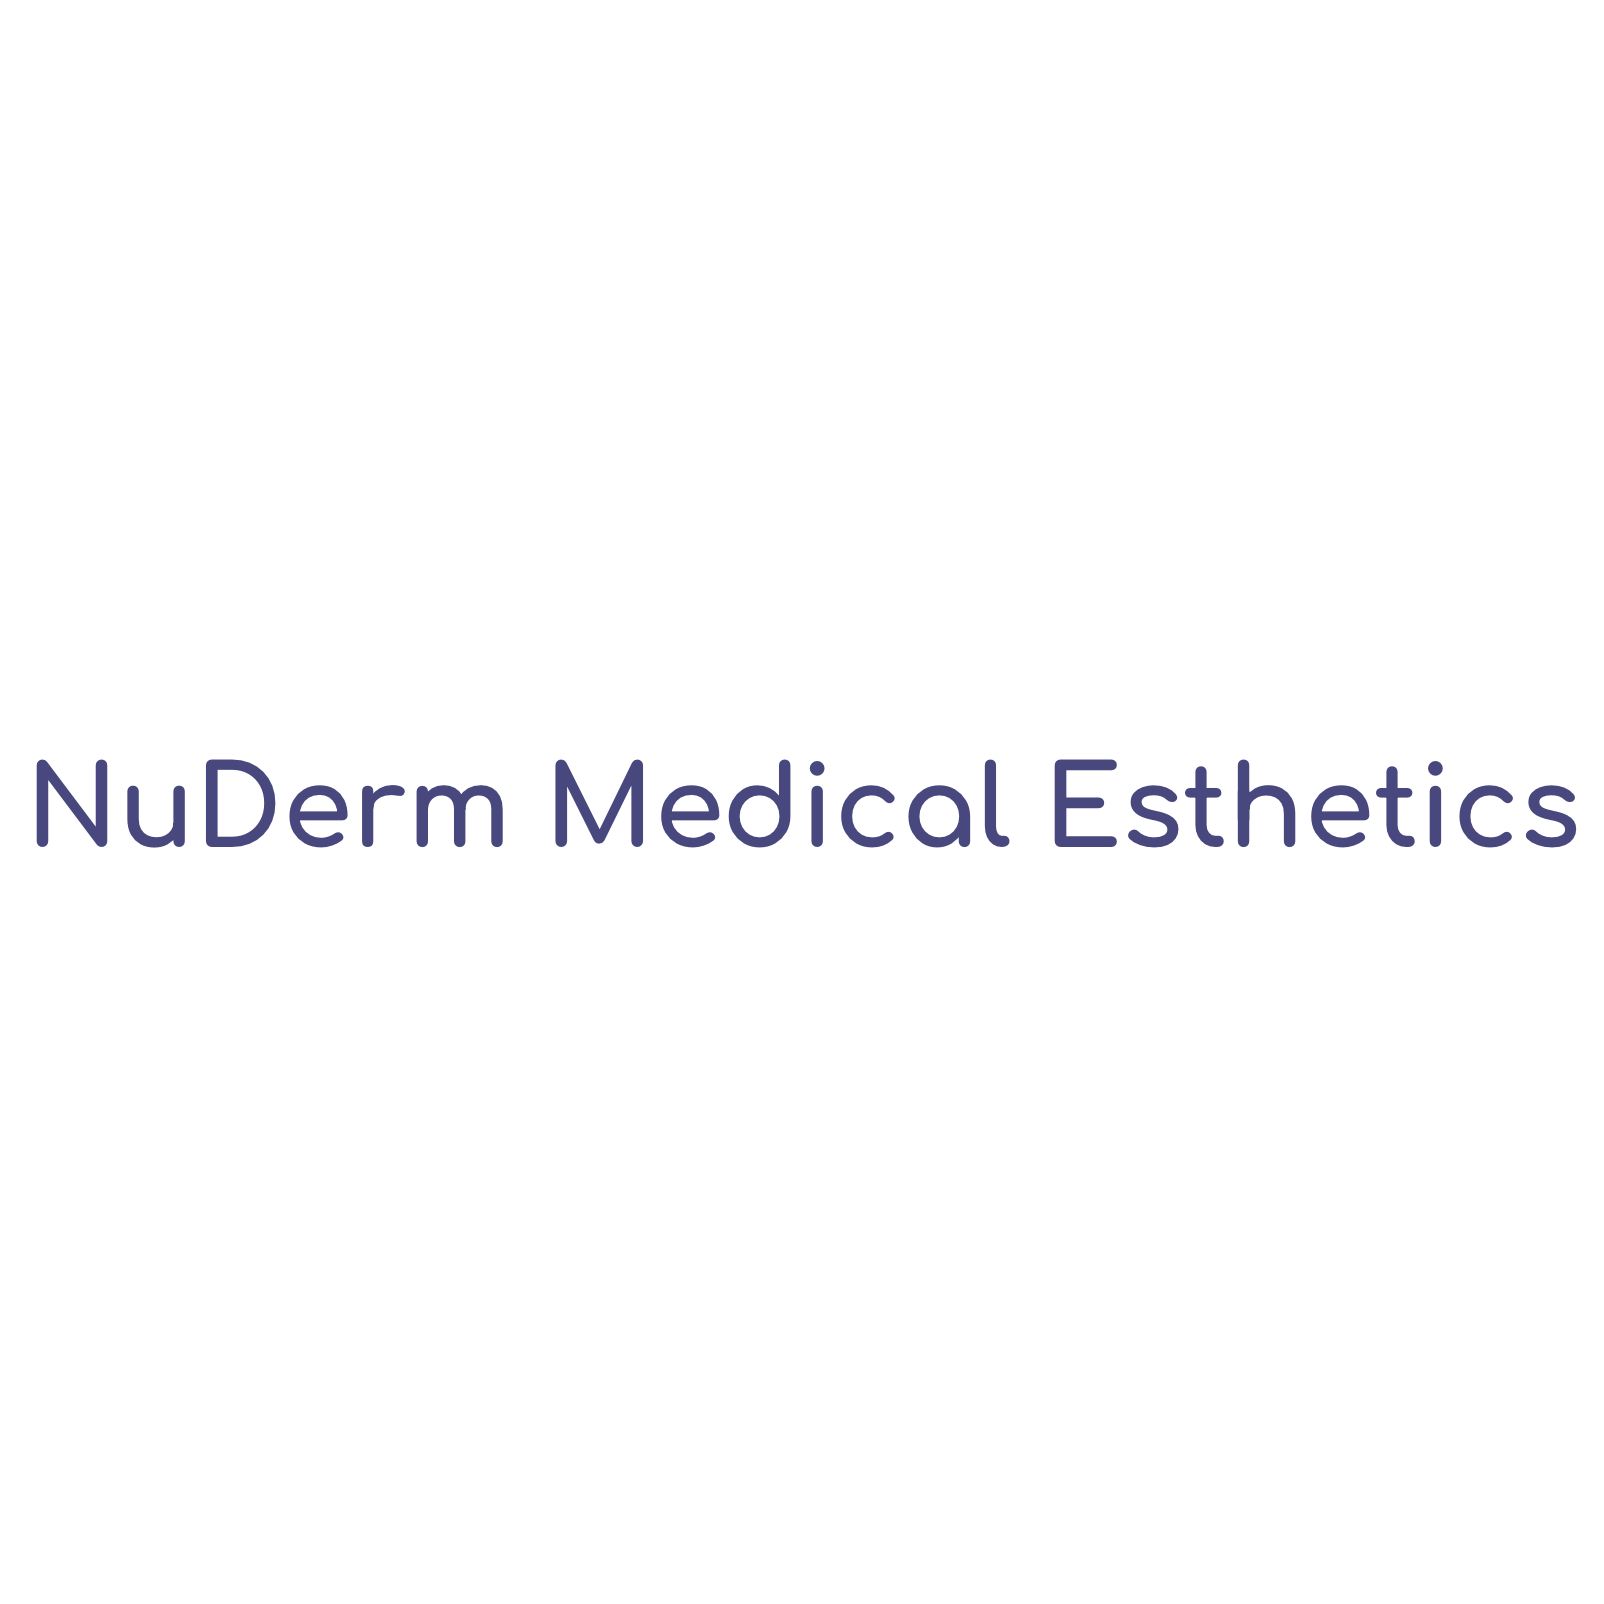 NuDerm Medical Esthetics